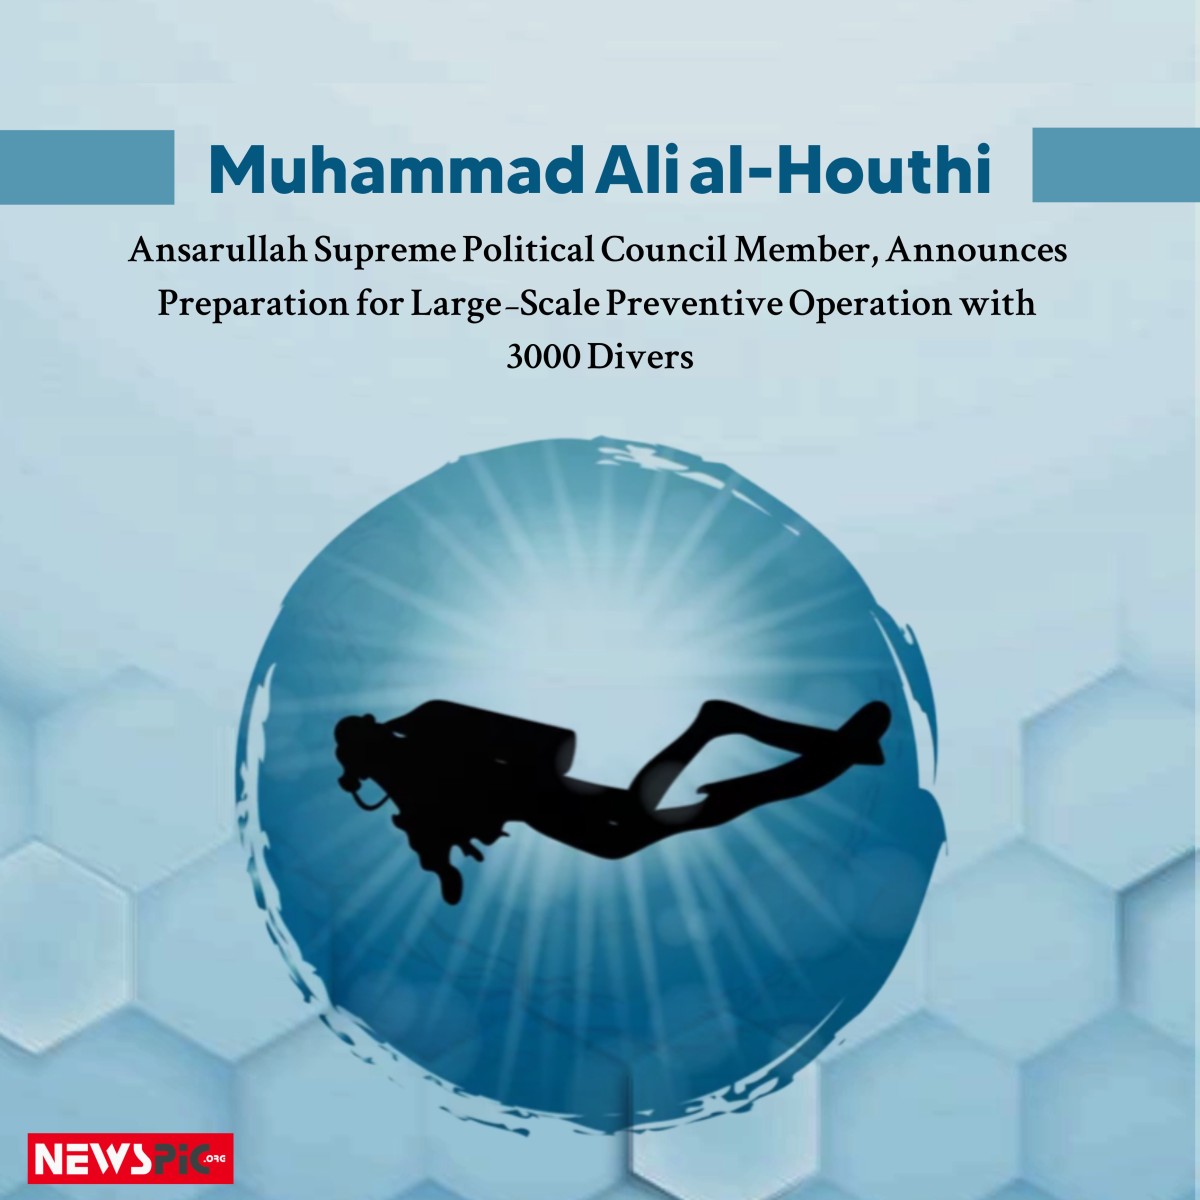 Muhammad Ali al-Houthi